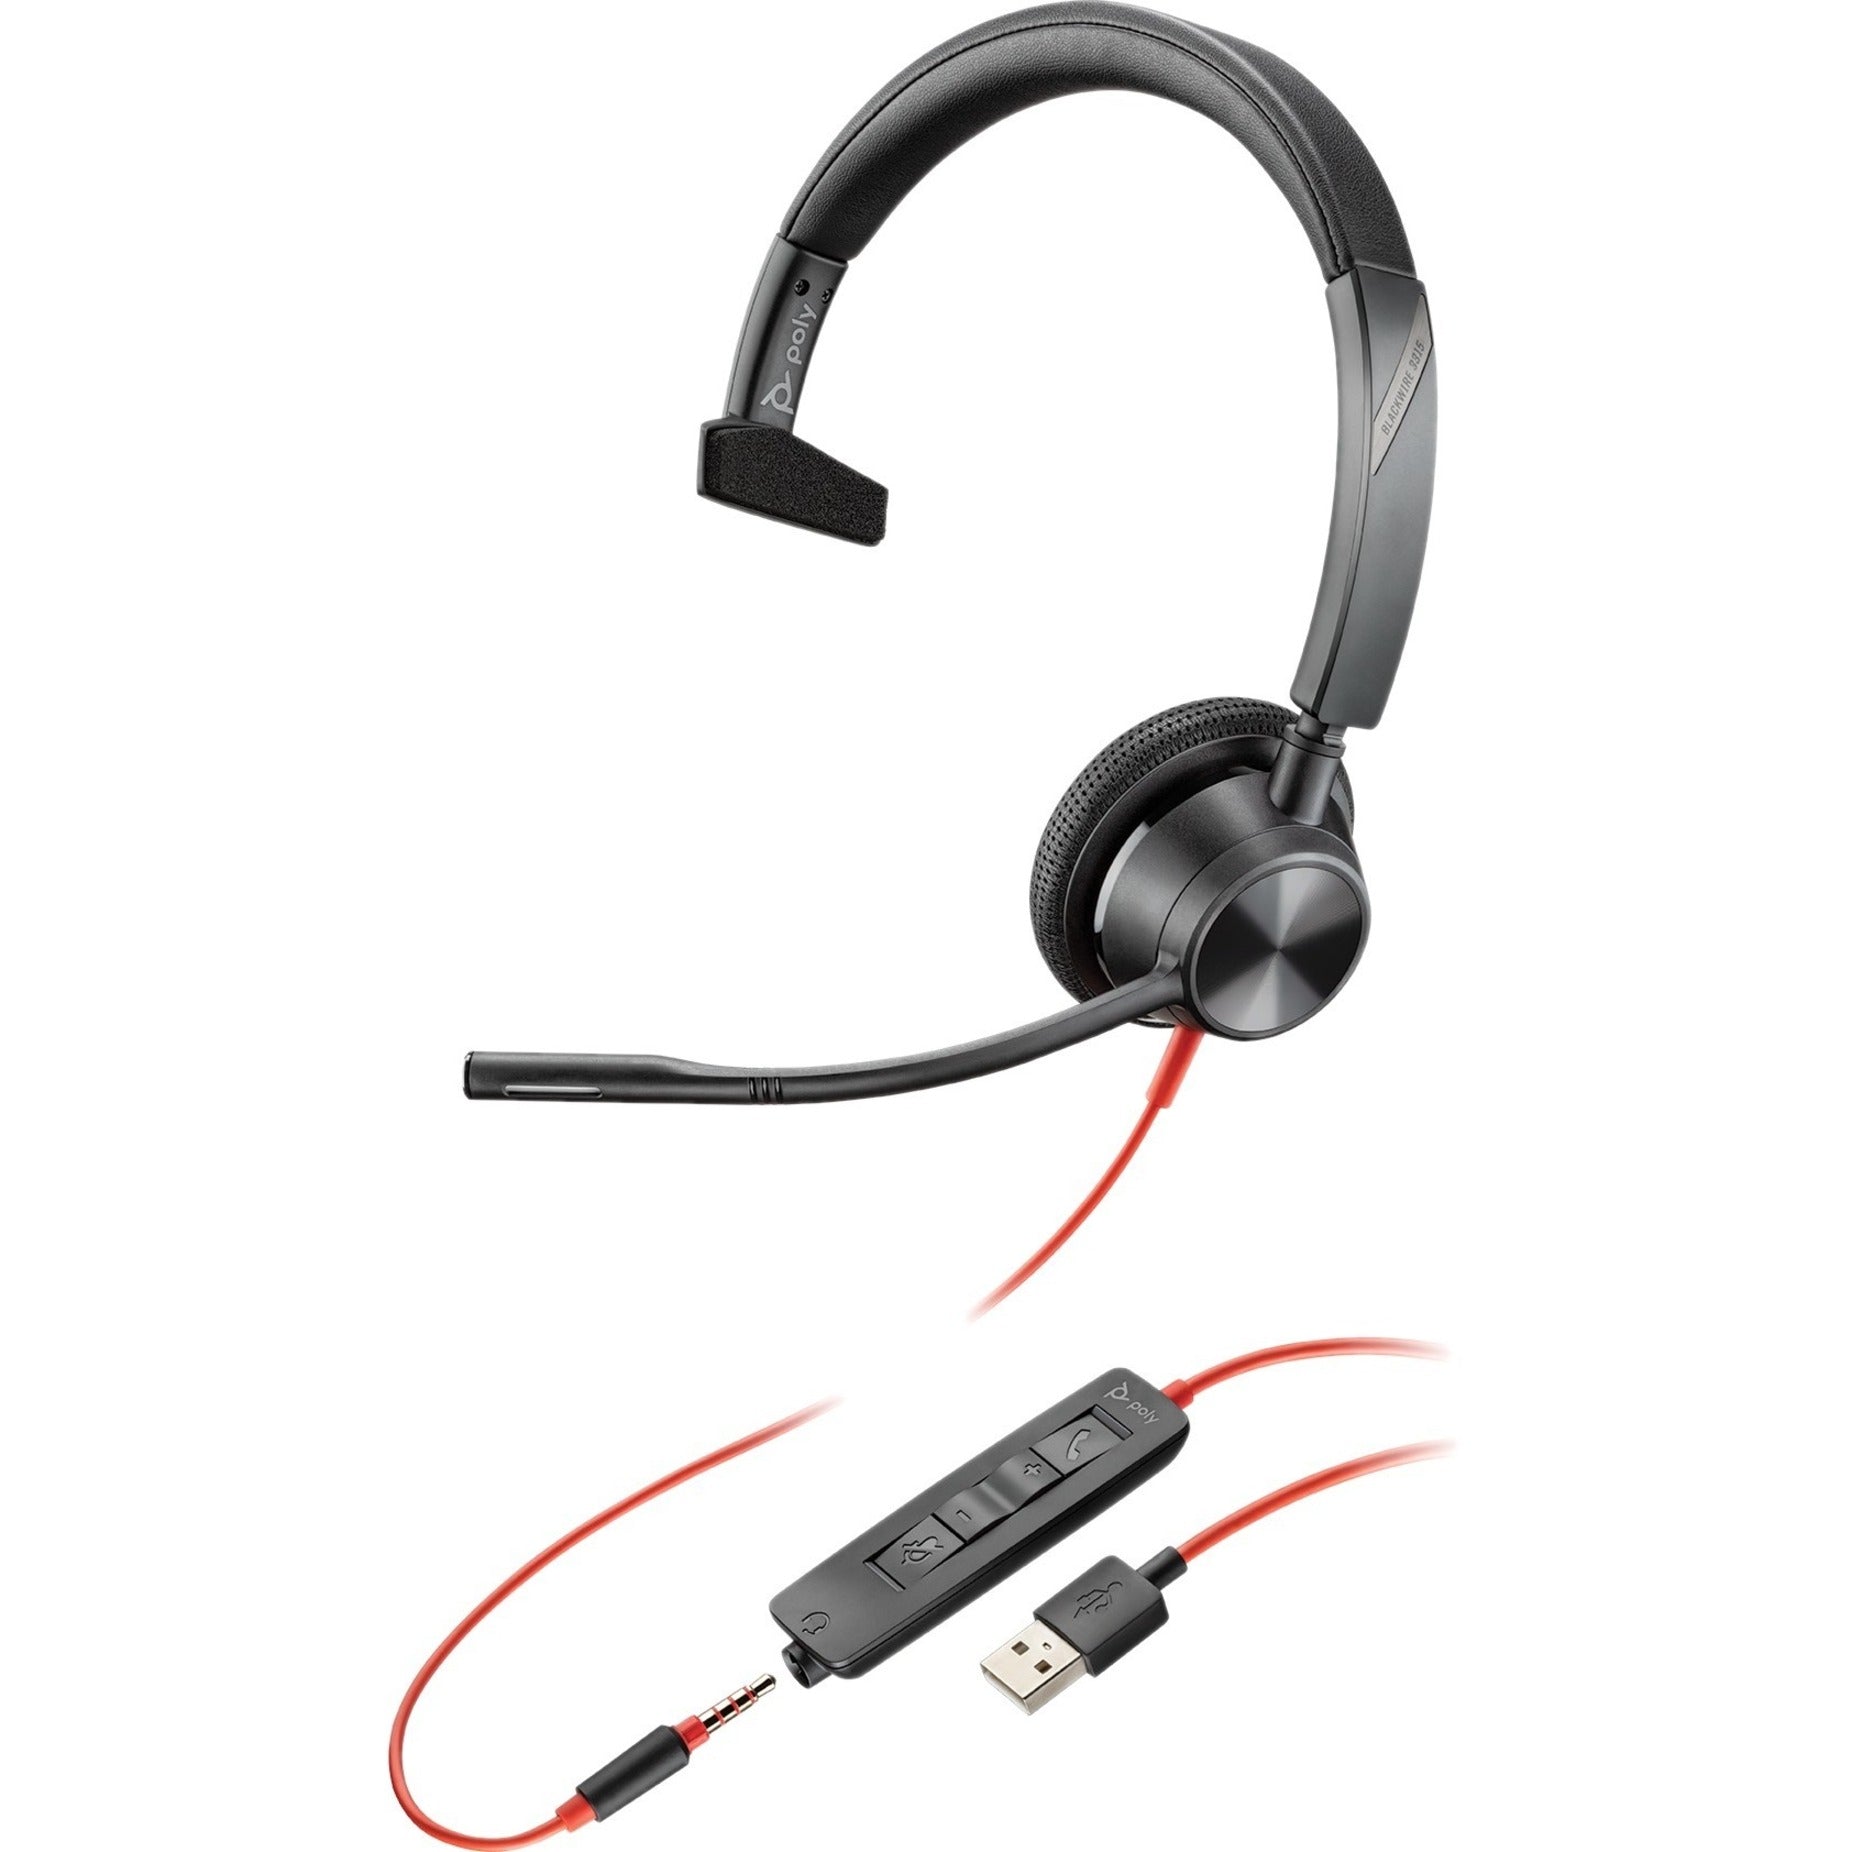 Poly 214014-101 Blackwire 3315 Microsoft USB-A Headset, Over-the-head, Mono Sound, Adjustable Headband